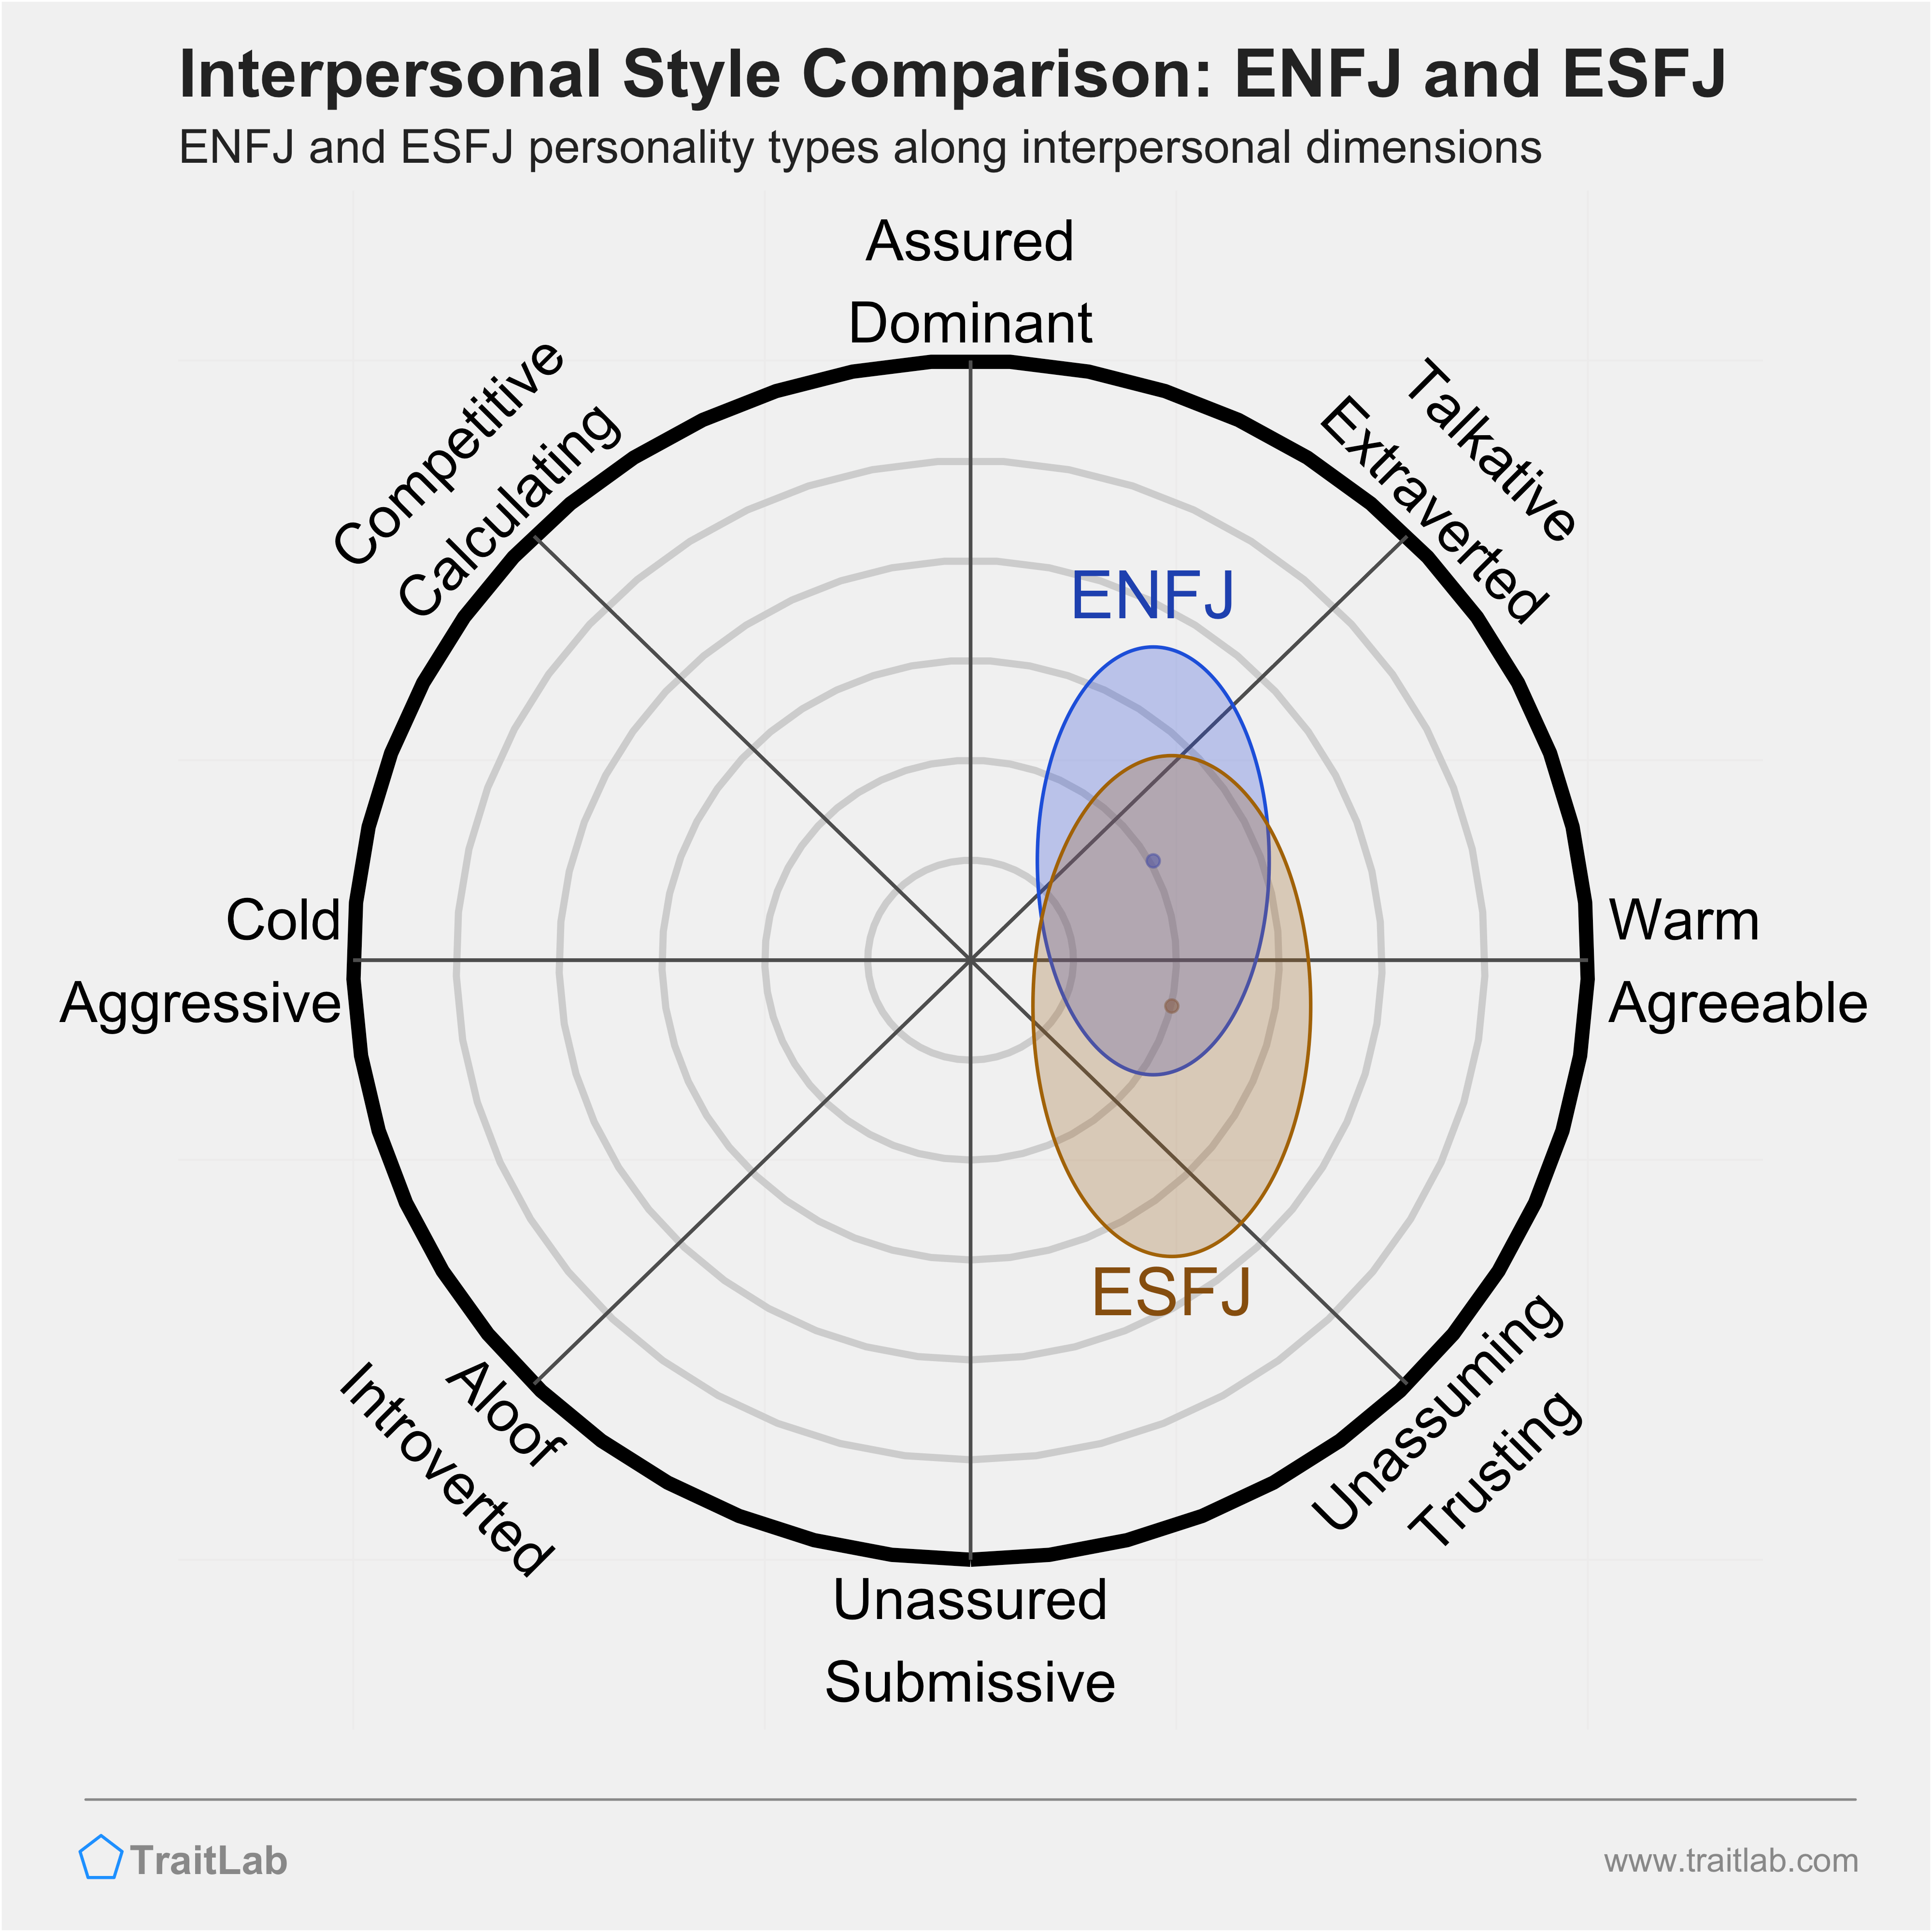 ENFJ and ESFJ comparison across interpersonal dimensions